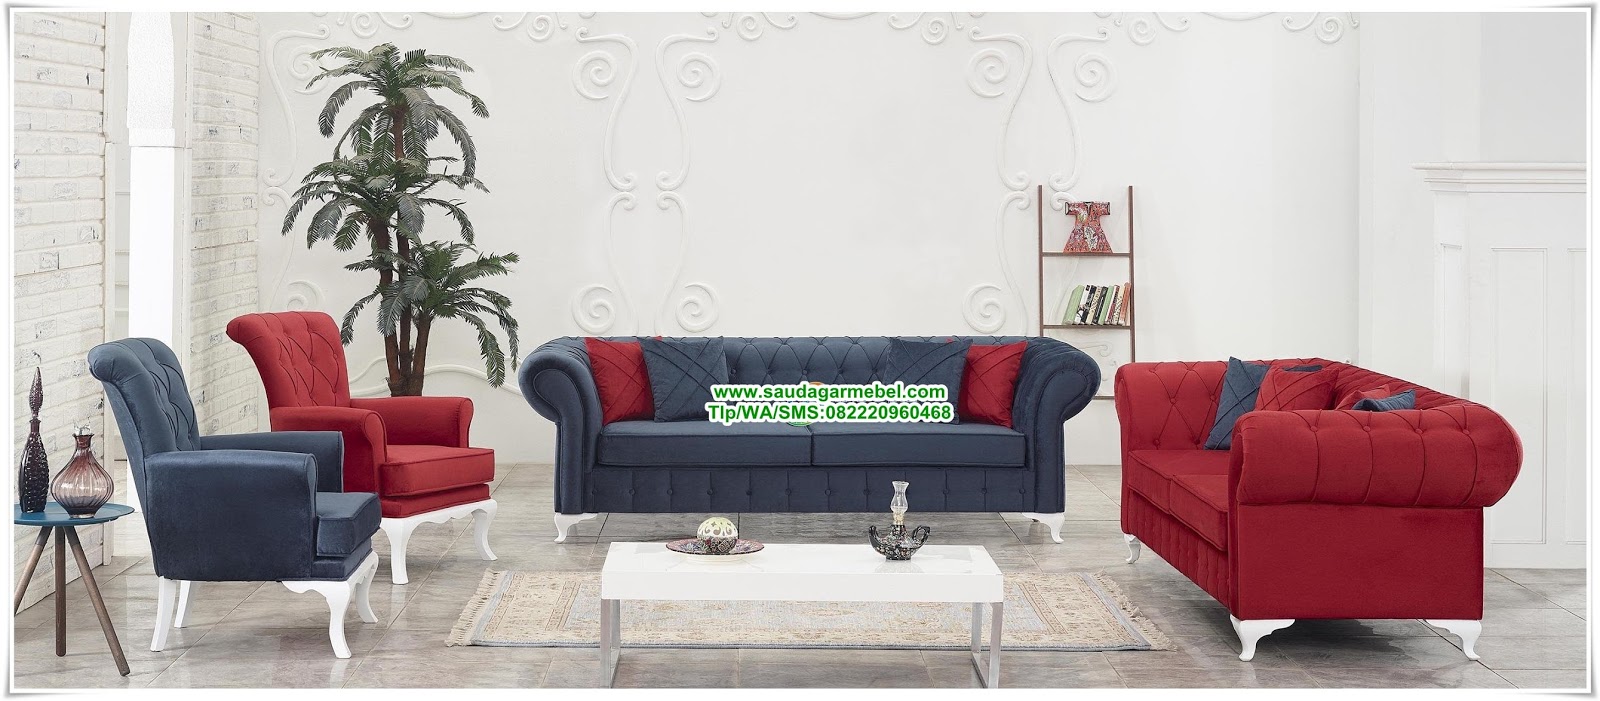  KUrsi  Sofa  Mewah Ruang  Keluarga  Terbaru SAUDAGAR MEBEL